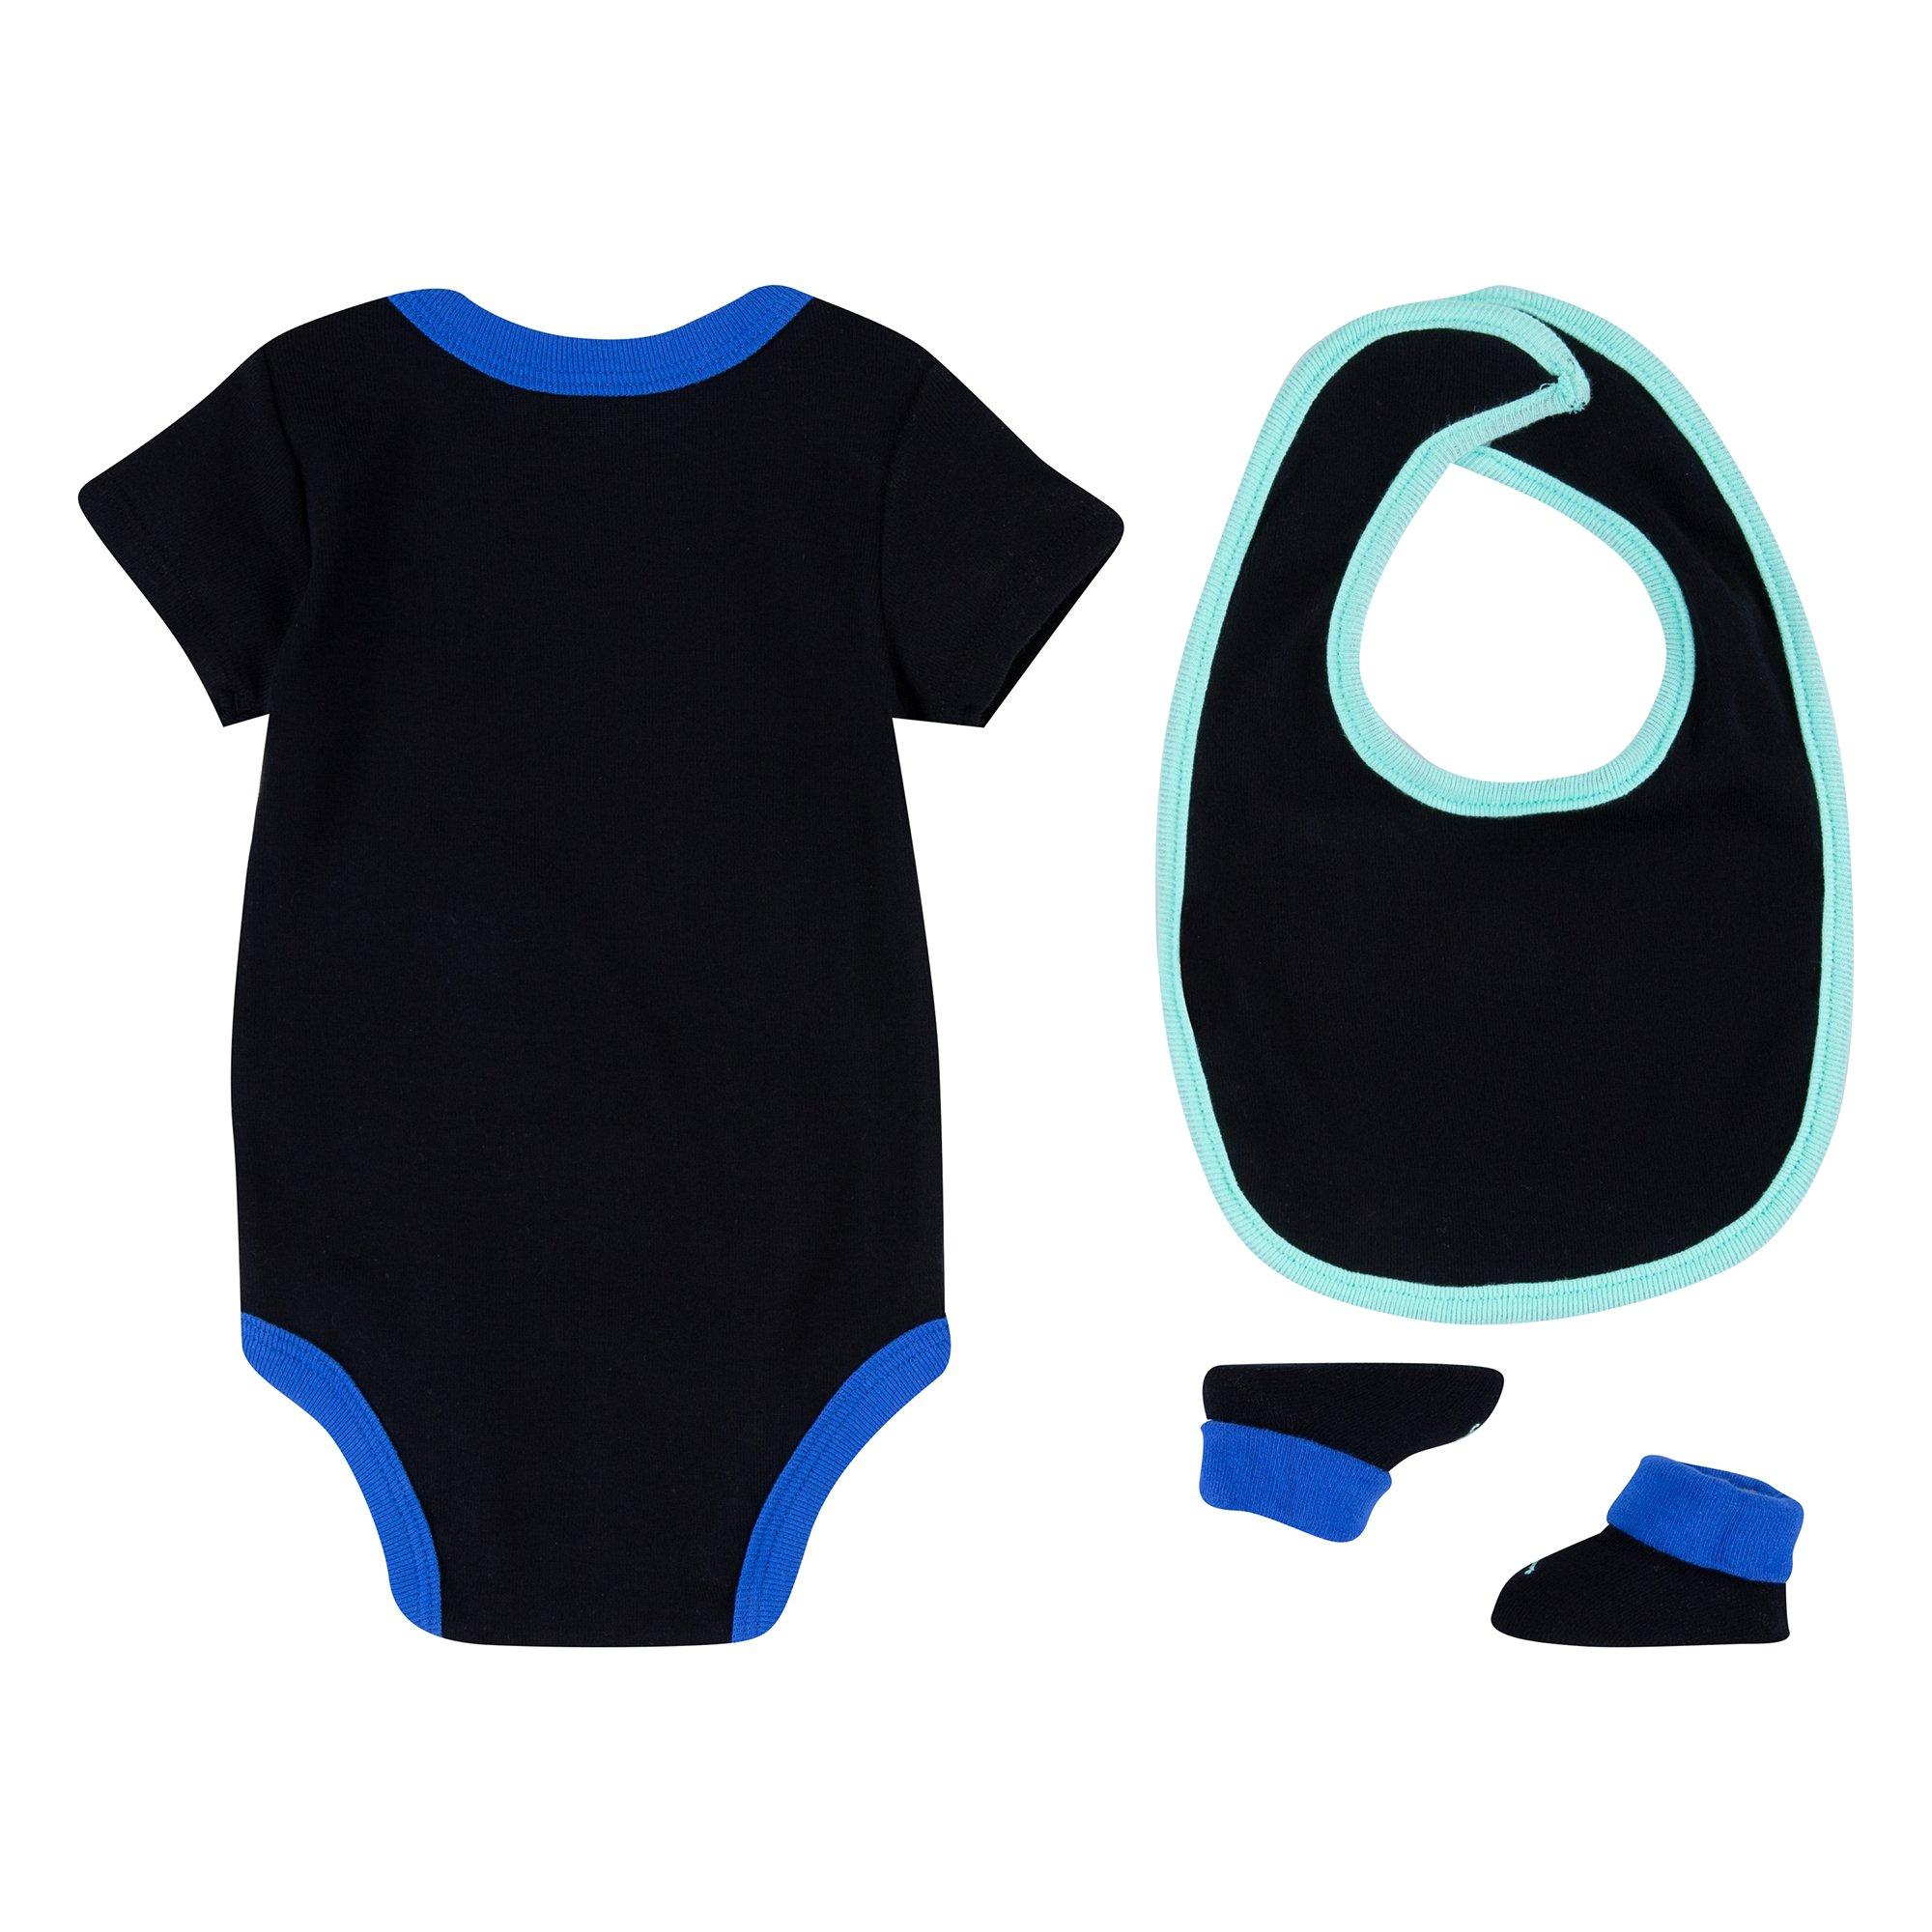 NEW 3 PIECE CRAYOLA INFANT SET BODYSUIT/CAP/BOOTIES 0-6 MONTHS BLUE $20 